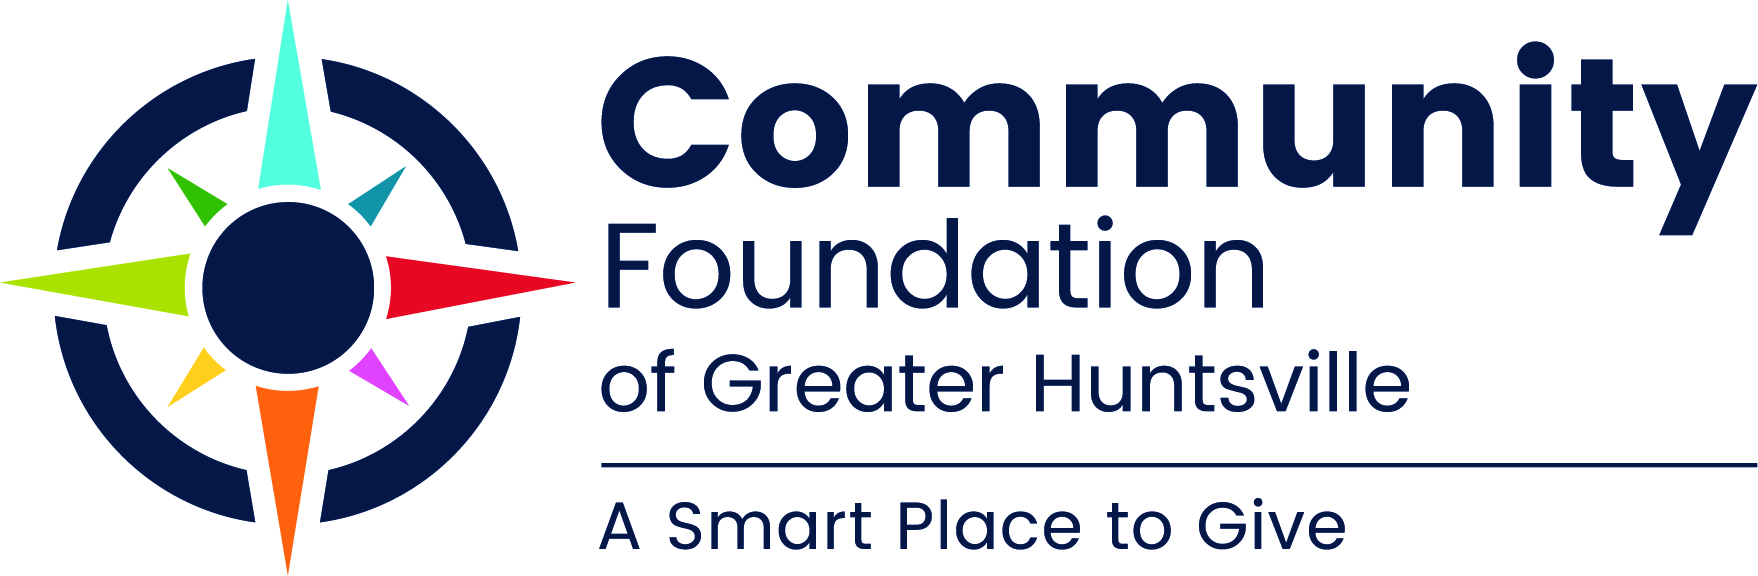 community_foundation_logo_Tag_Horizontal